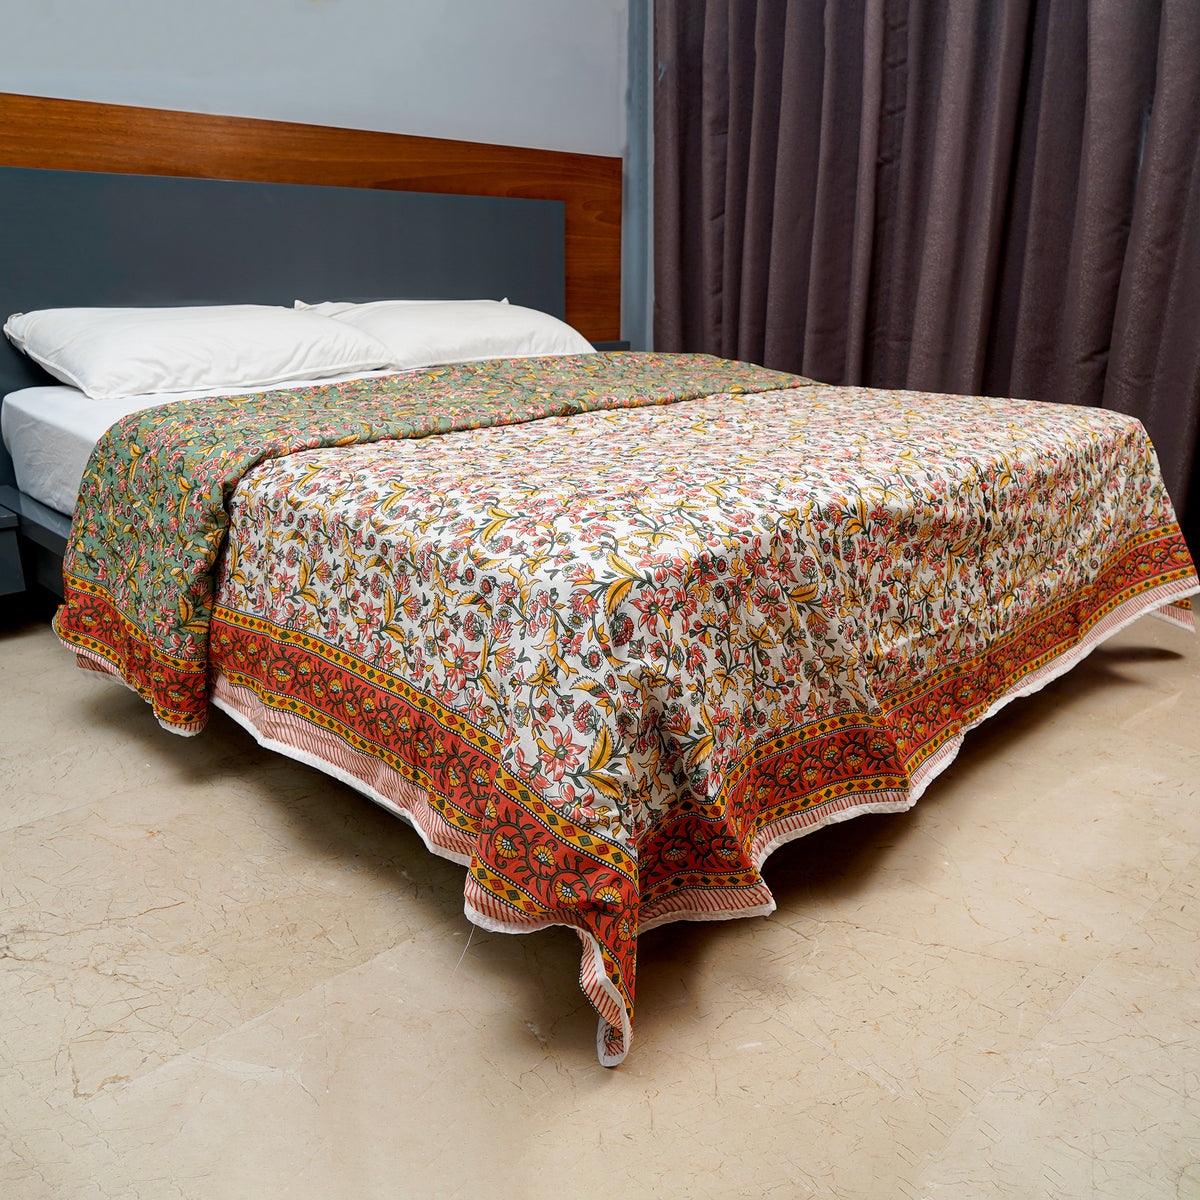 Inizio Cotton Lightweight Reversible Double Bed Dohar Jaipuri Floral Printed AC Blanket All Season Duvet Comforter